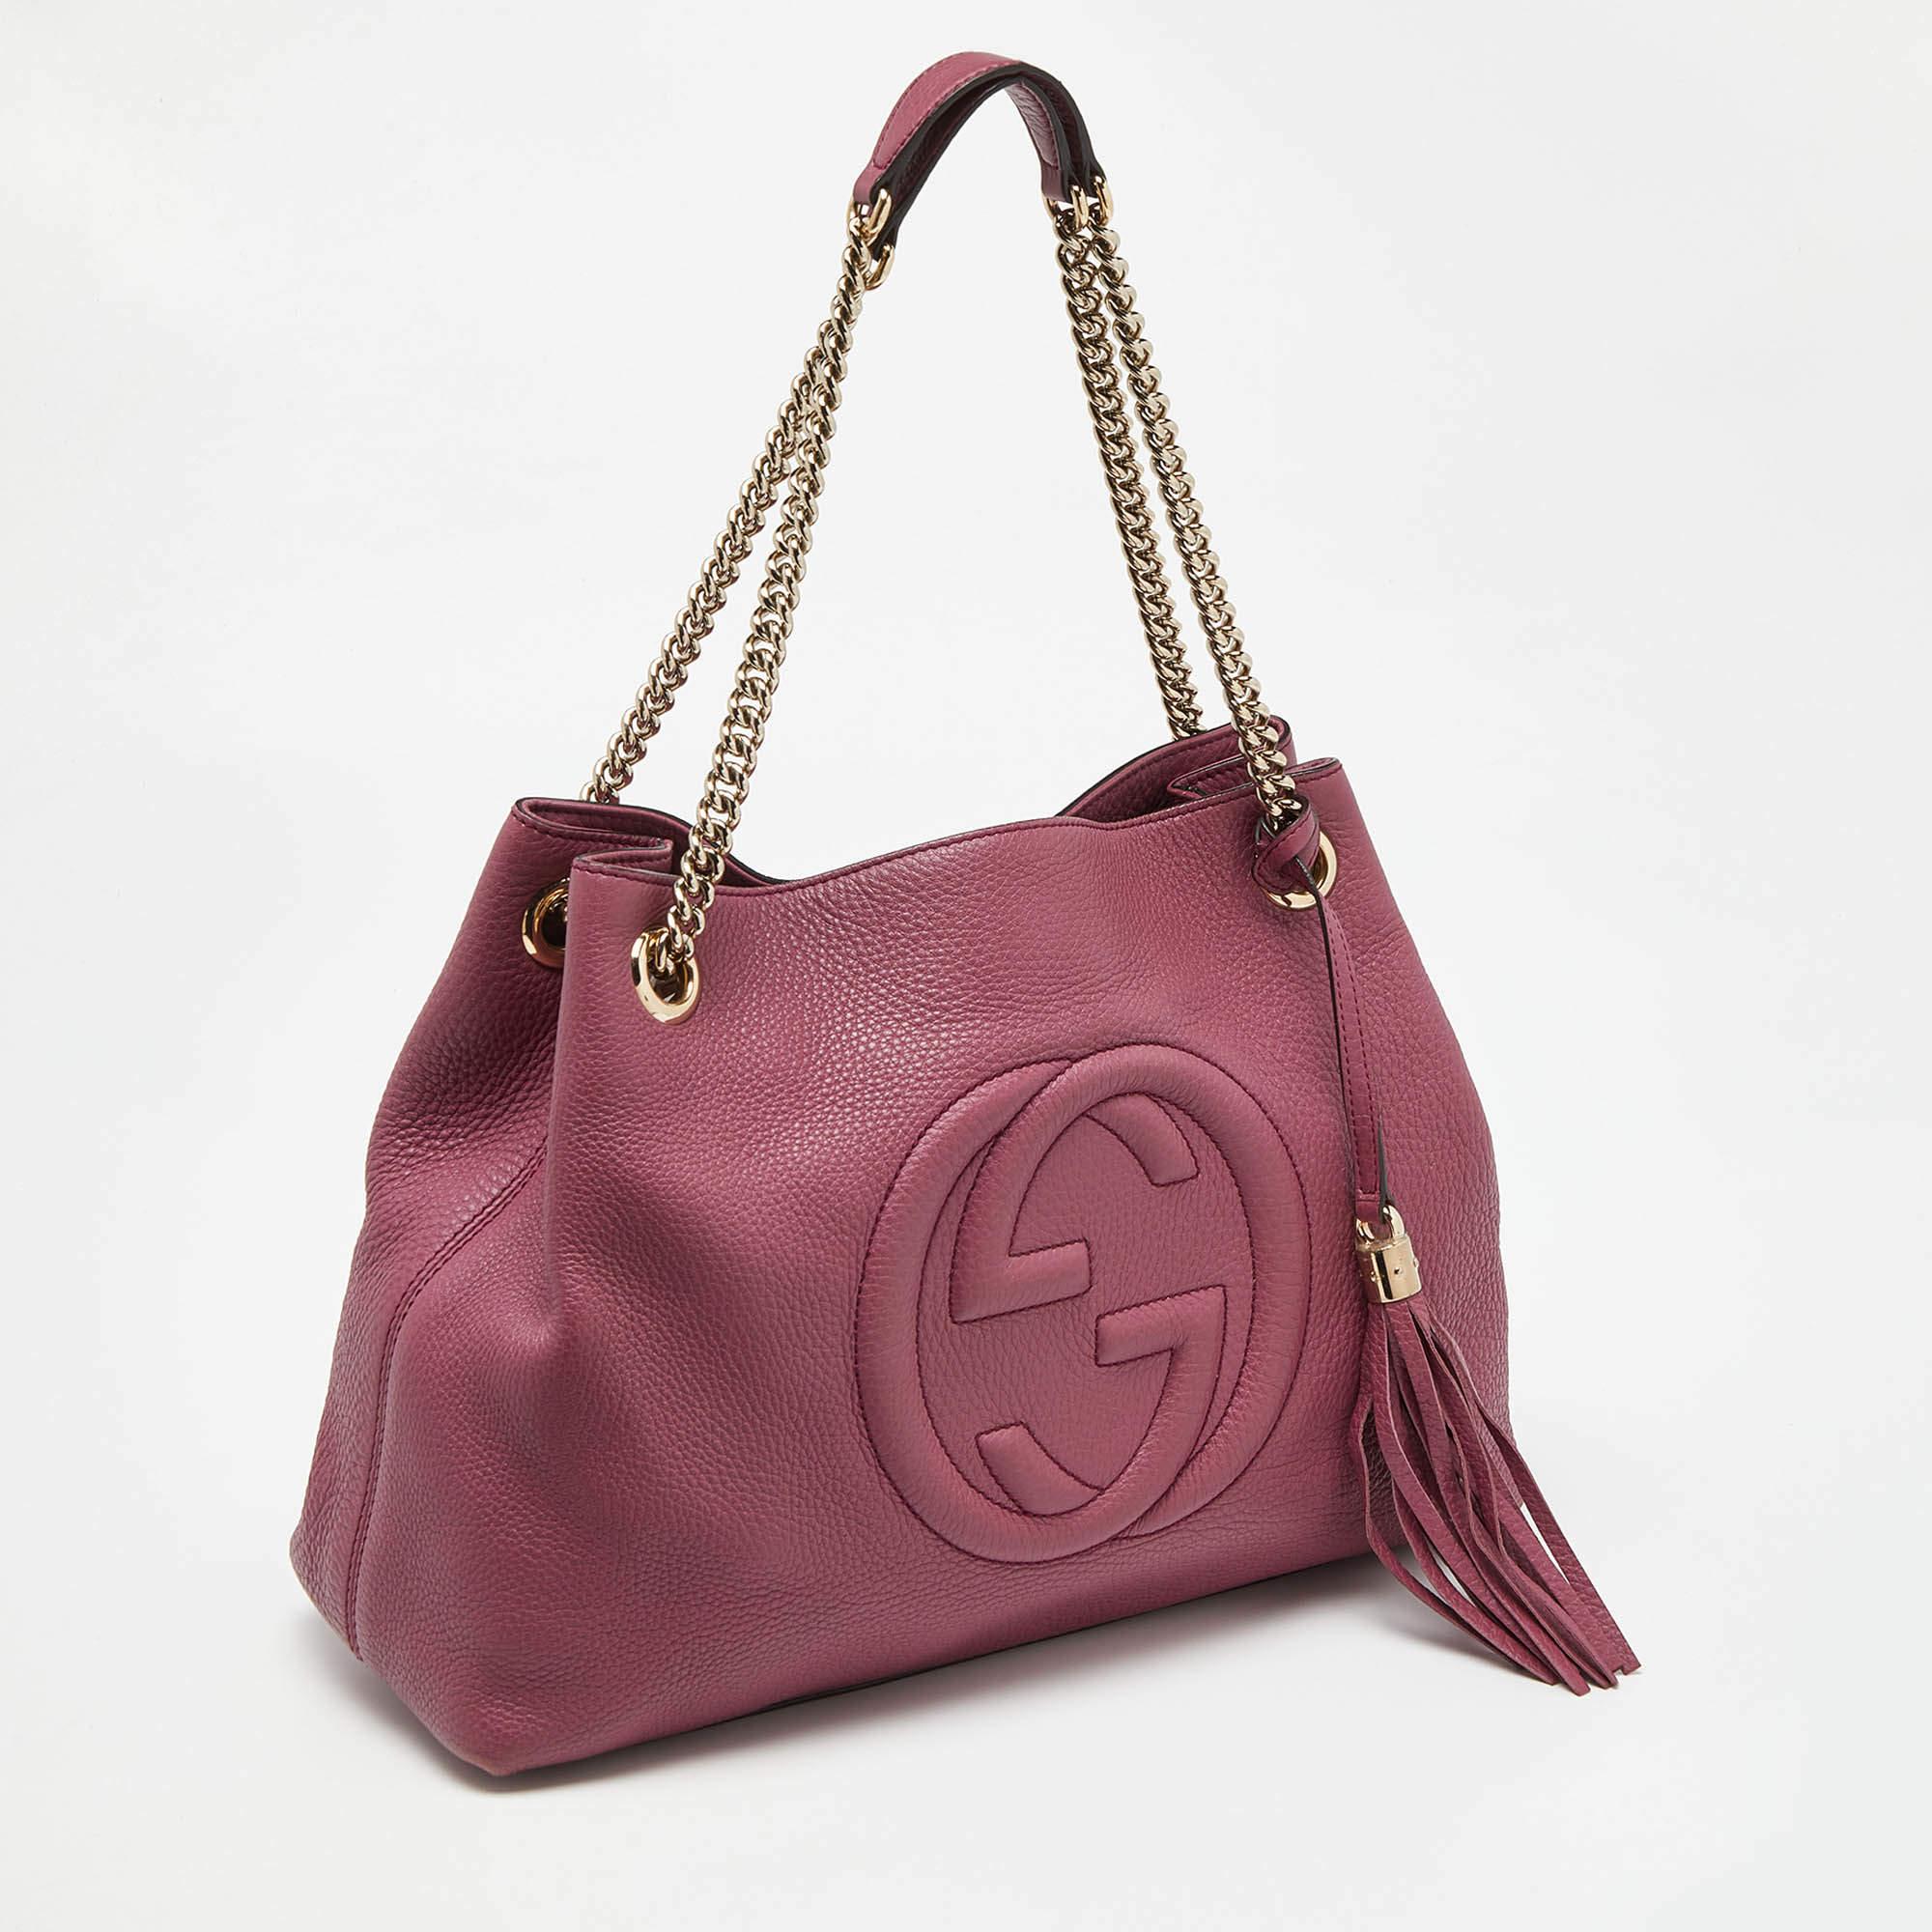 Gucci Pink Pebbled Leather Medium Soho Chain Tote In Good Condition For Sale In Dubai, Al Qouz 2